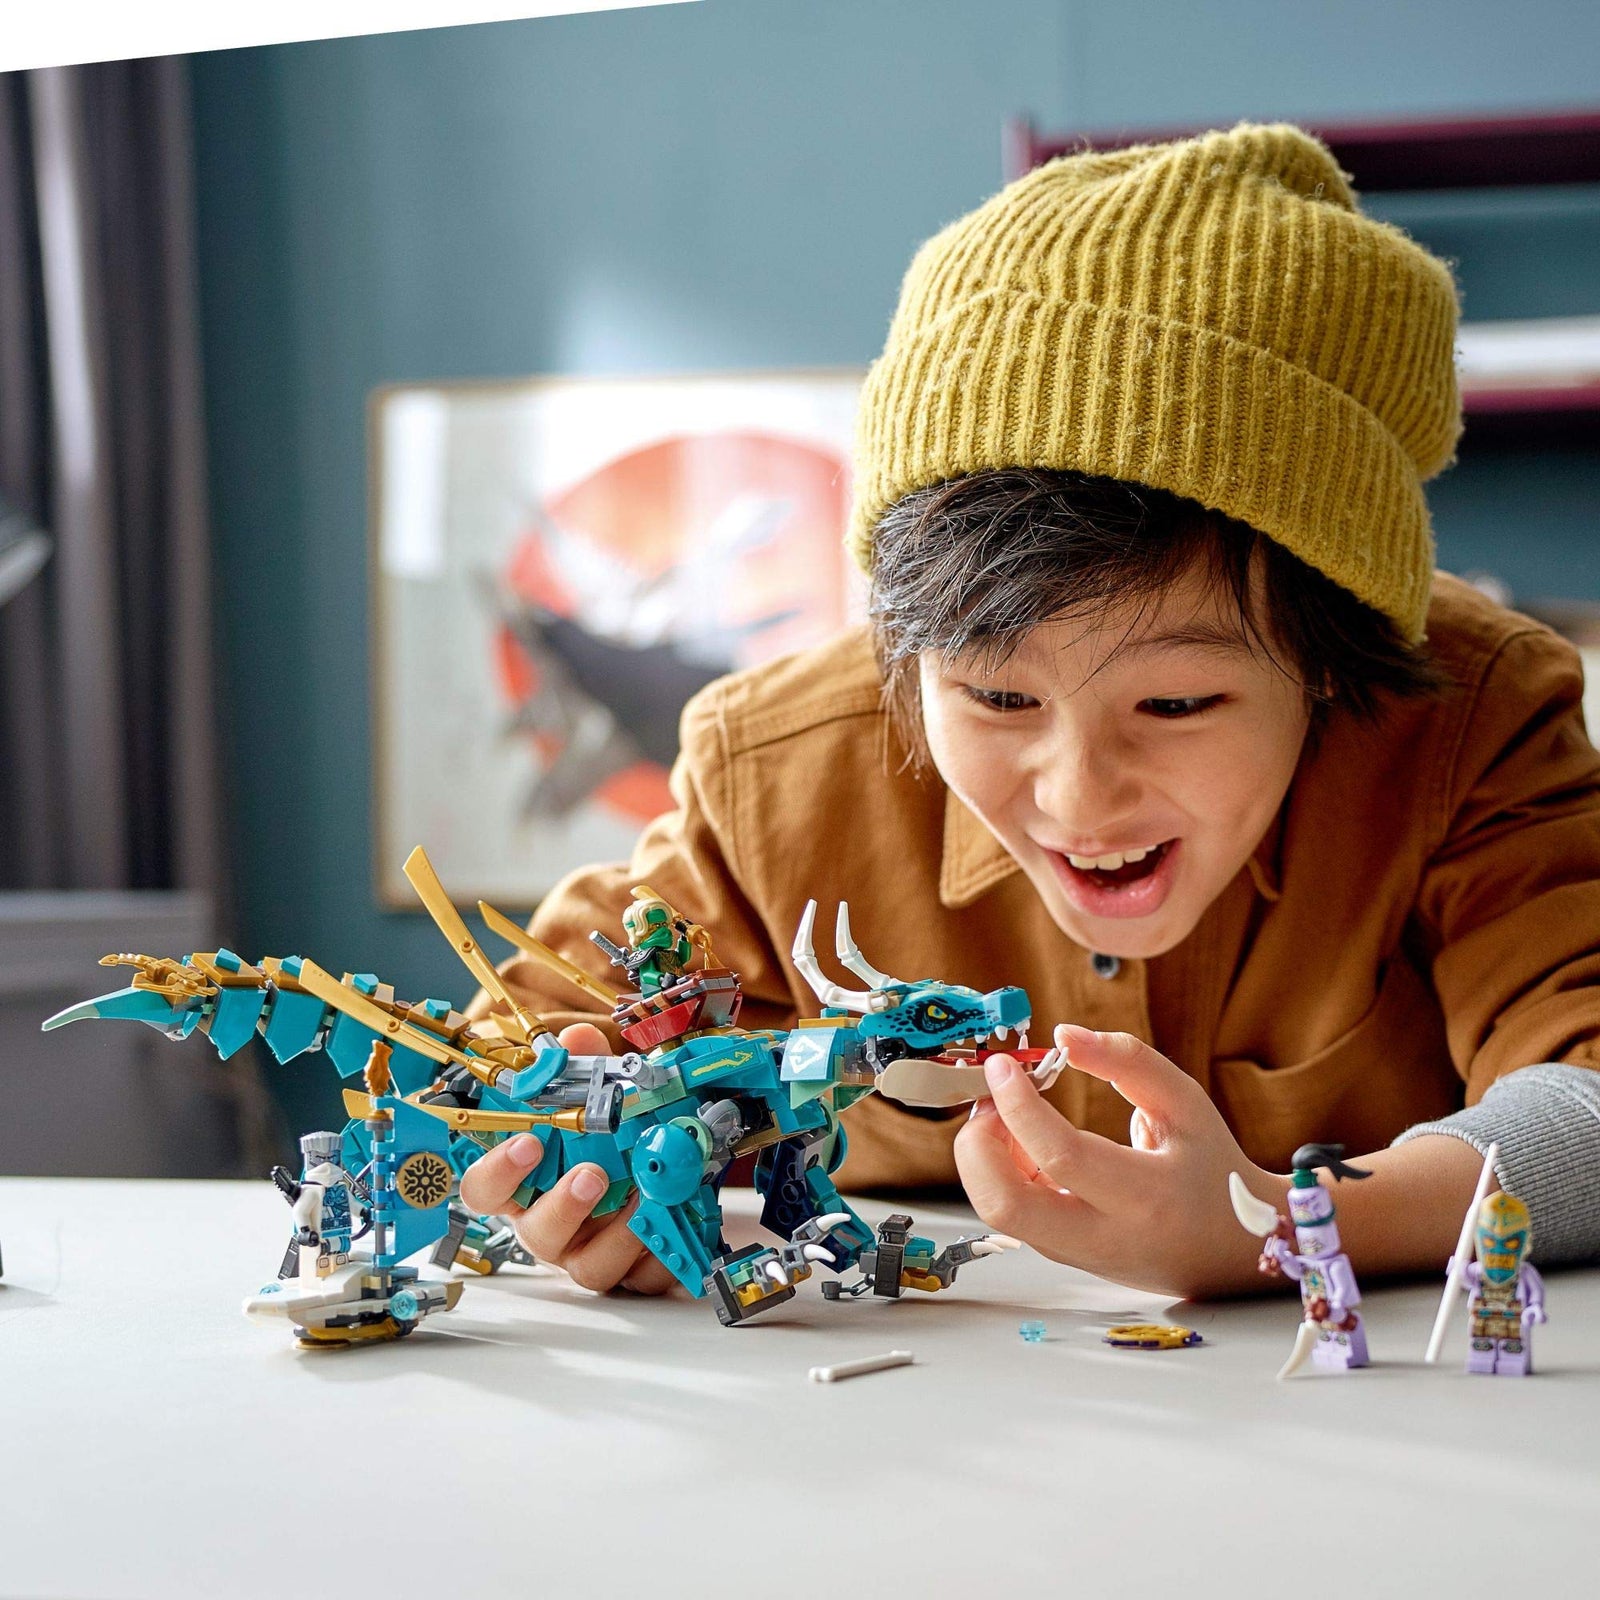 LEGO NINJAGO Jungle Dragon 71746 Building Kit; Ninja Playset Featuring Posable Dragon Toy and NINJAGO Lloyd and Zane; Cool Toy for Kids Who Love Imaginative Play, New 2021 (506 Pieces)